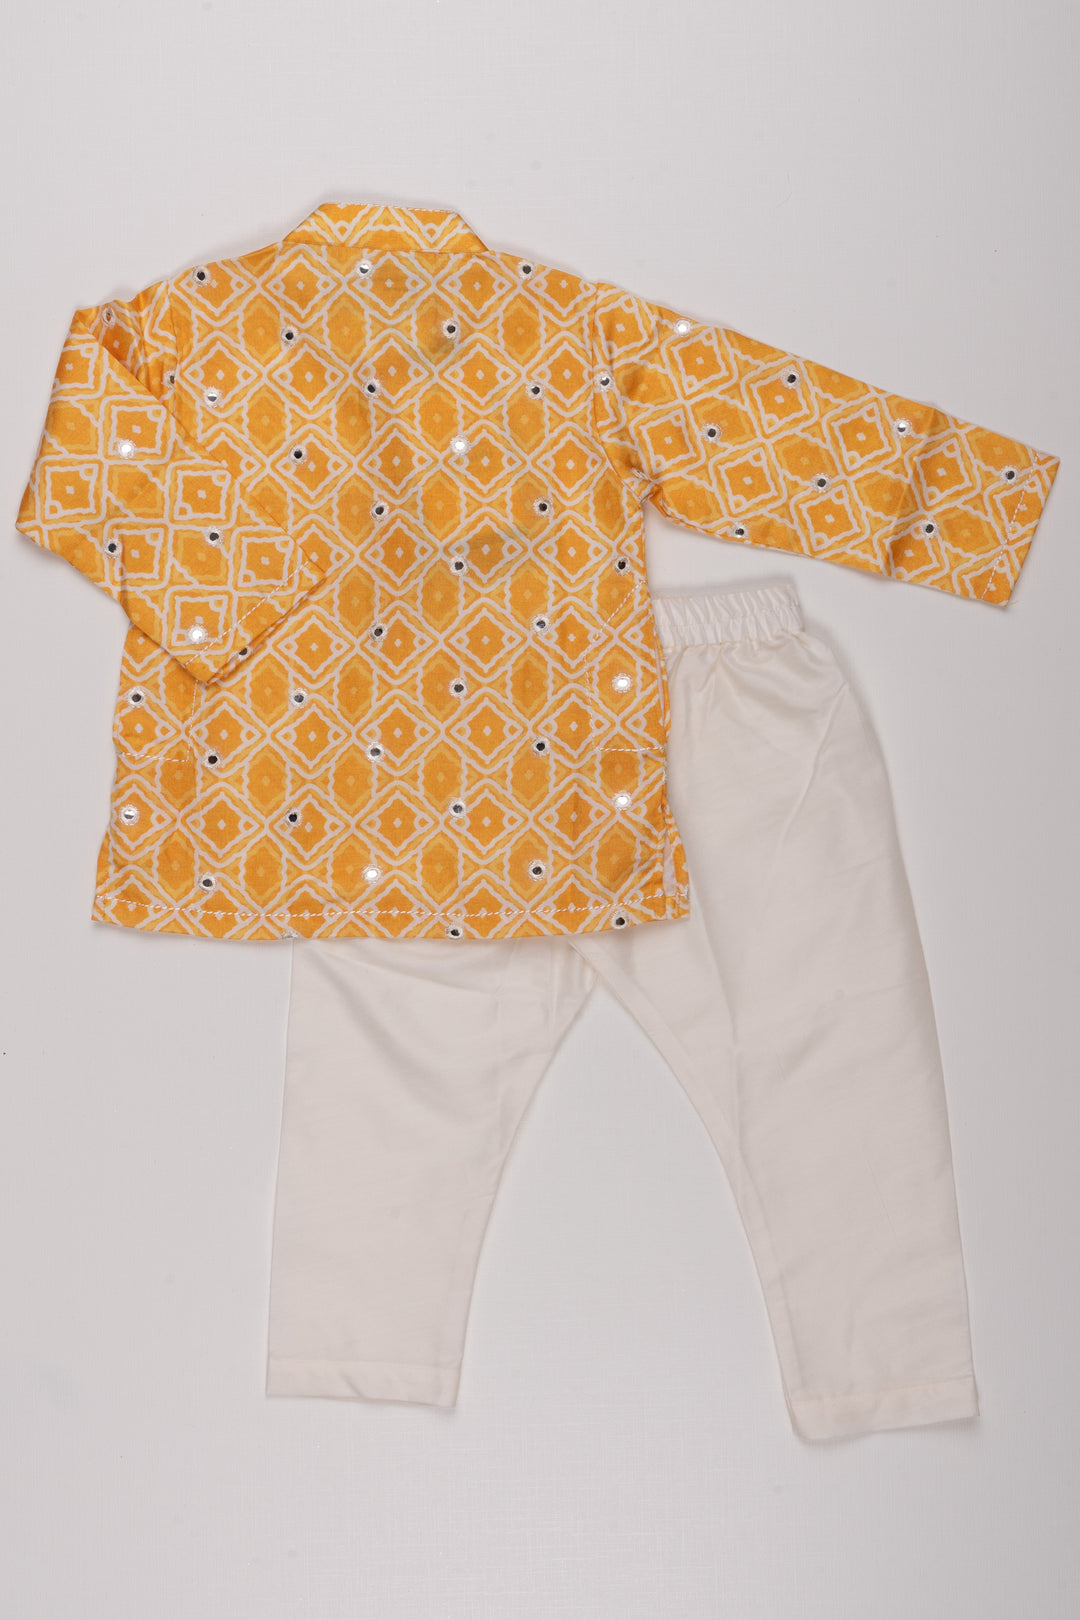 The Nesavu Boys Kurtha Set Golden Glory: Mirror-Embroidered Geometric Printed Yellow Kurta Shirt & Pant Set for Boys Nesavu Kids Kurta and Pant Set | Authentic Indian Boys Wear | The Nesavu